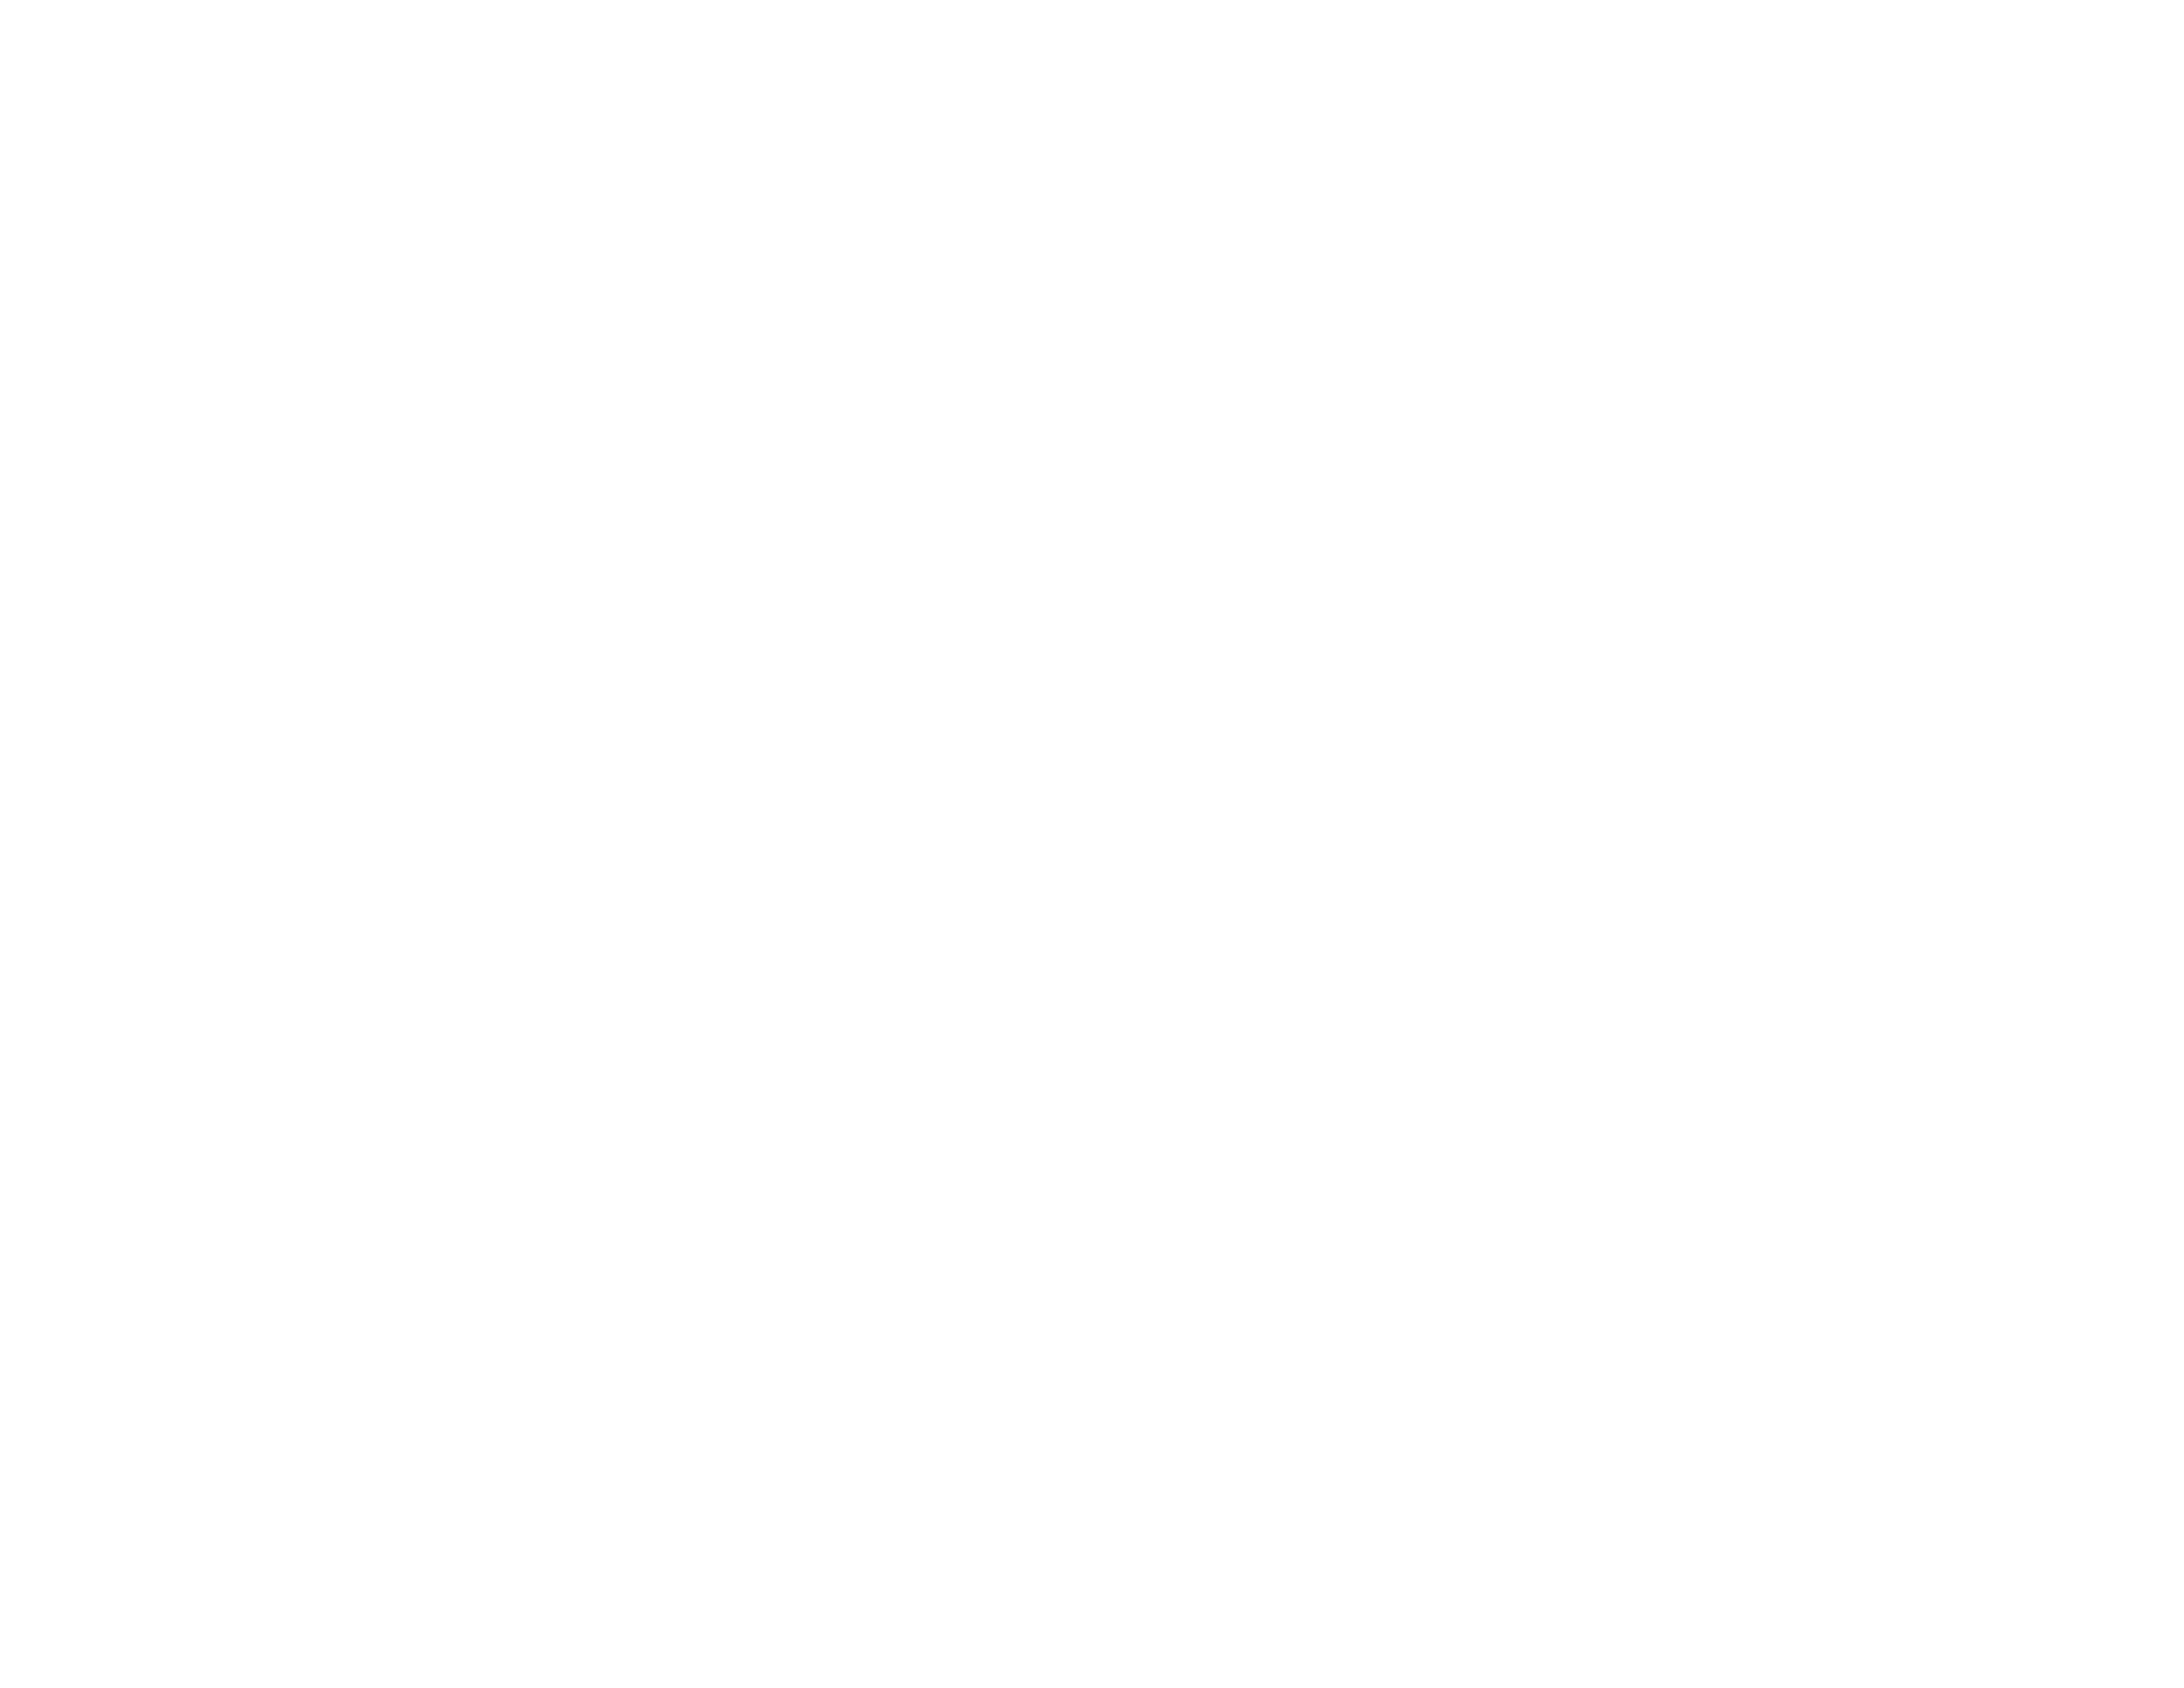 Logo Hexal